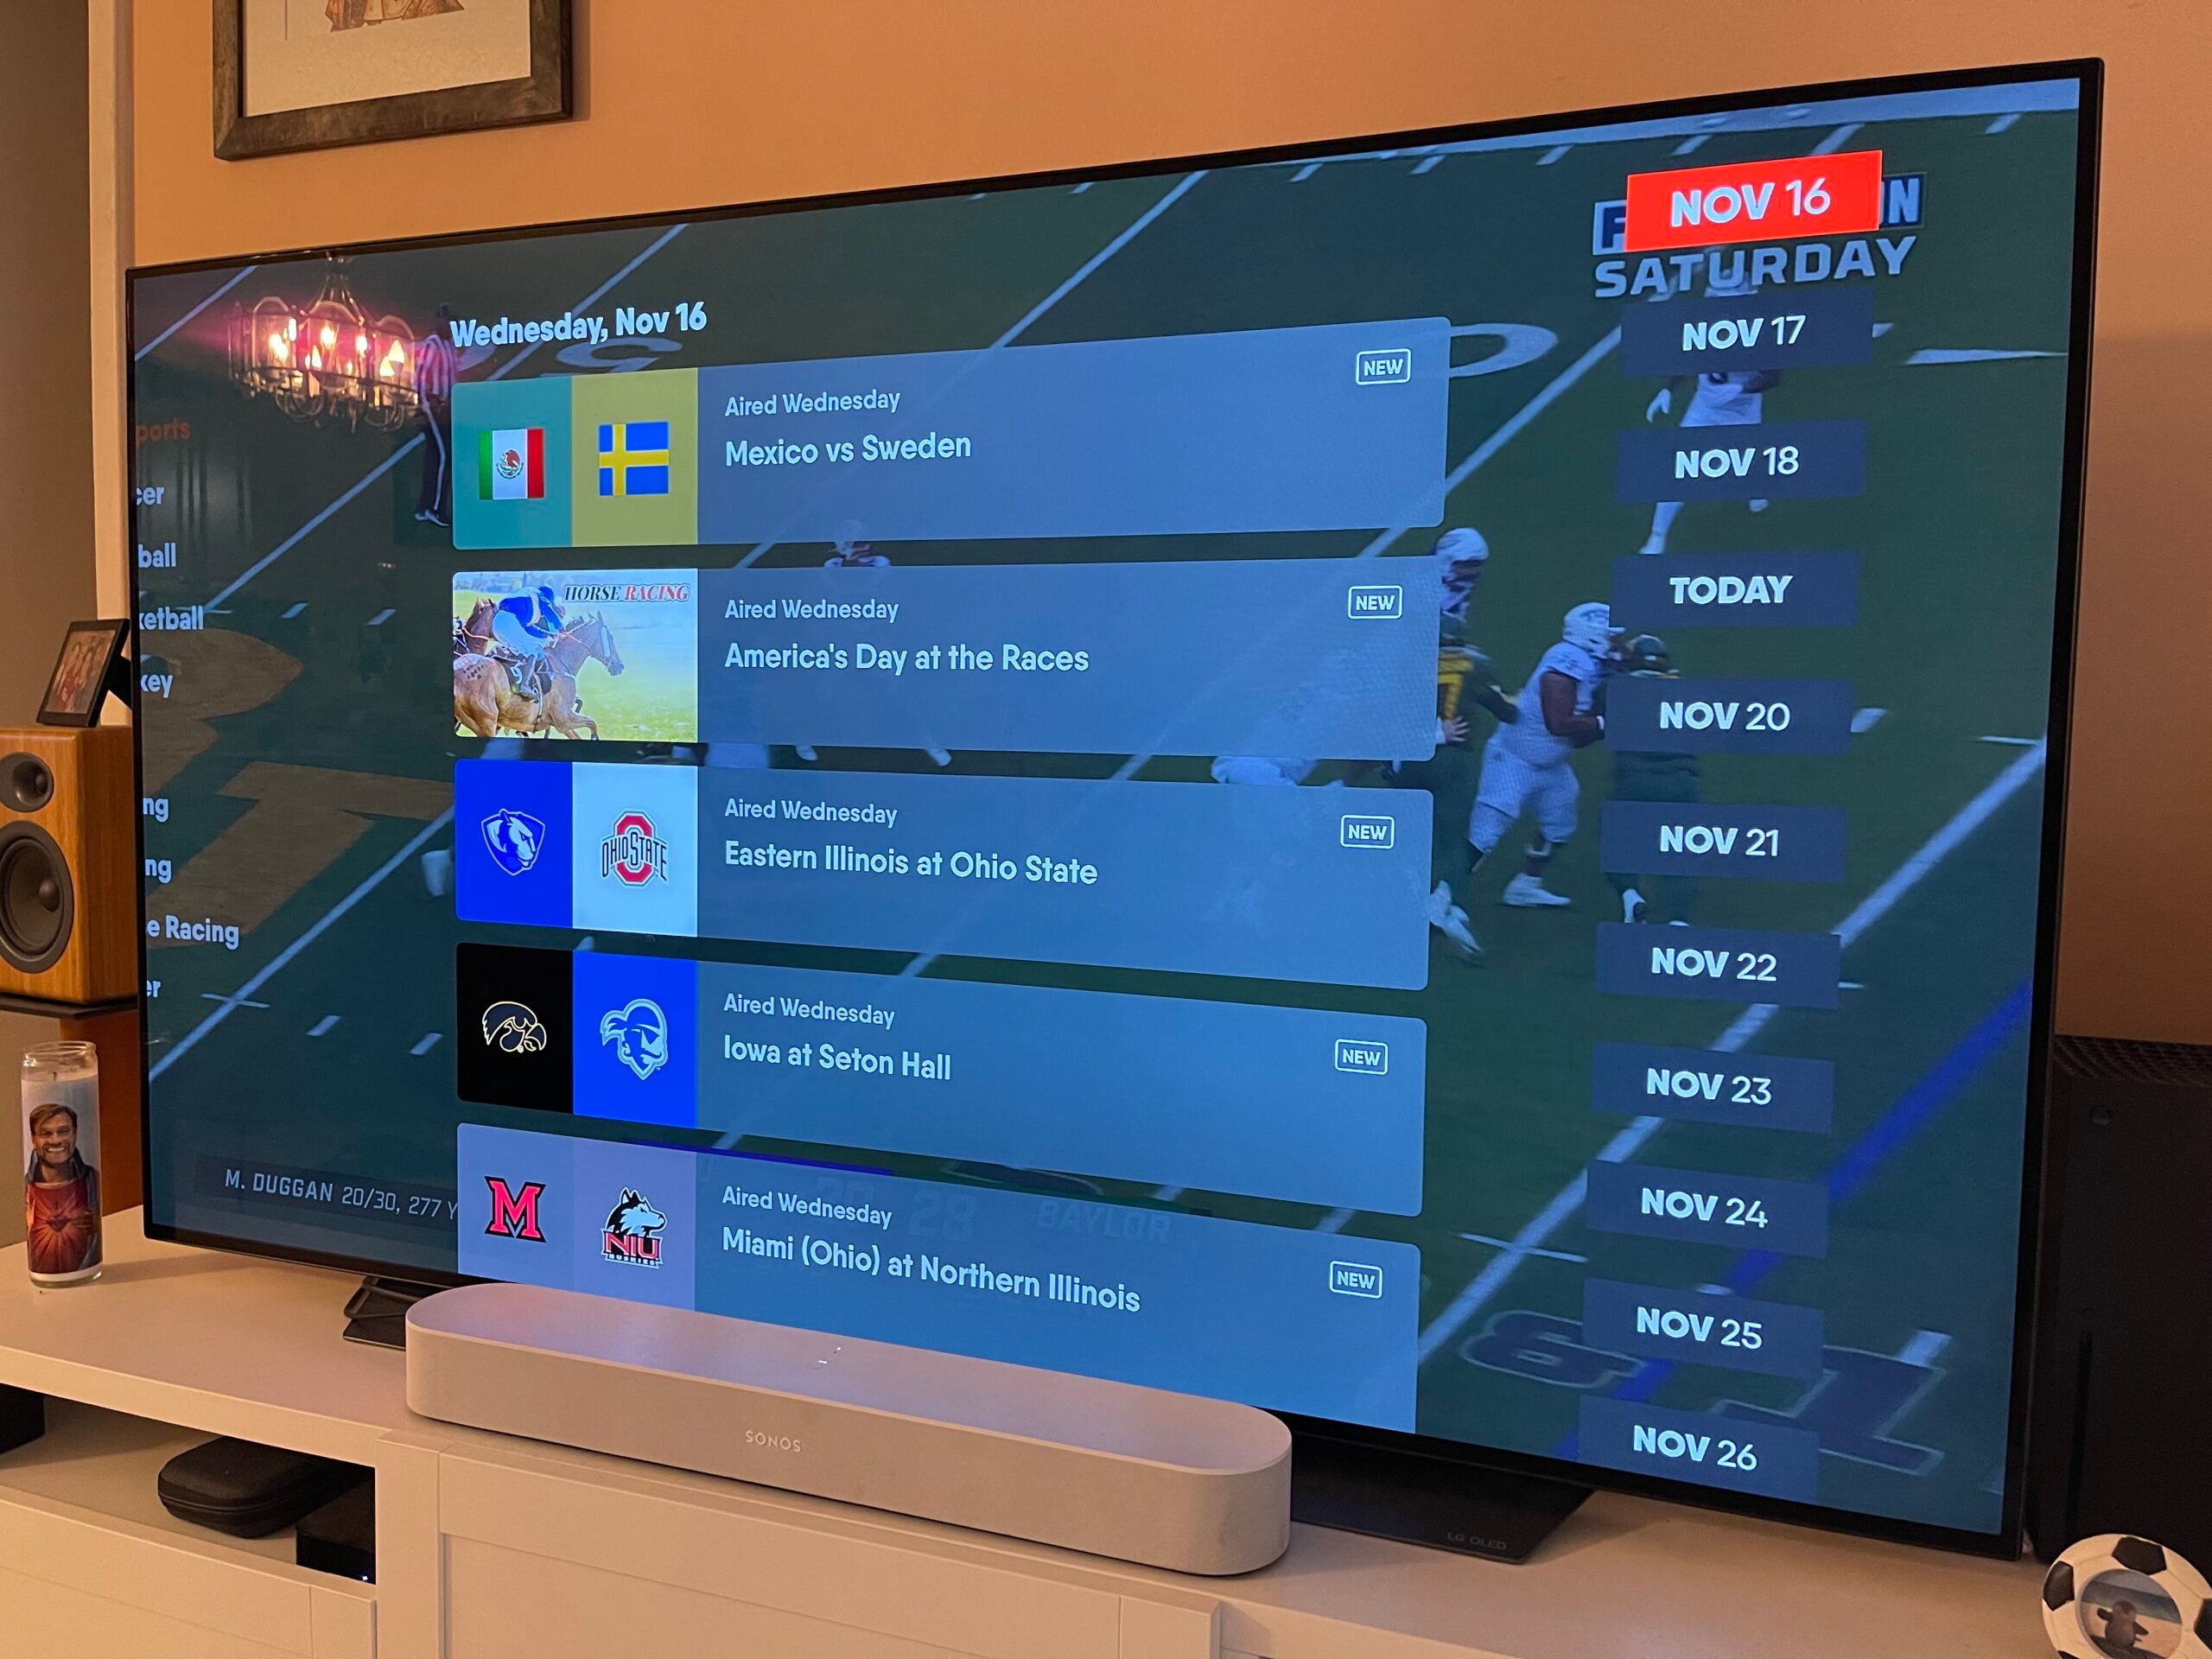 How to Watch Nba League Pass on Samsung Smart Tv?